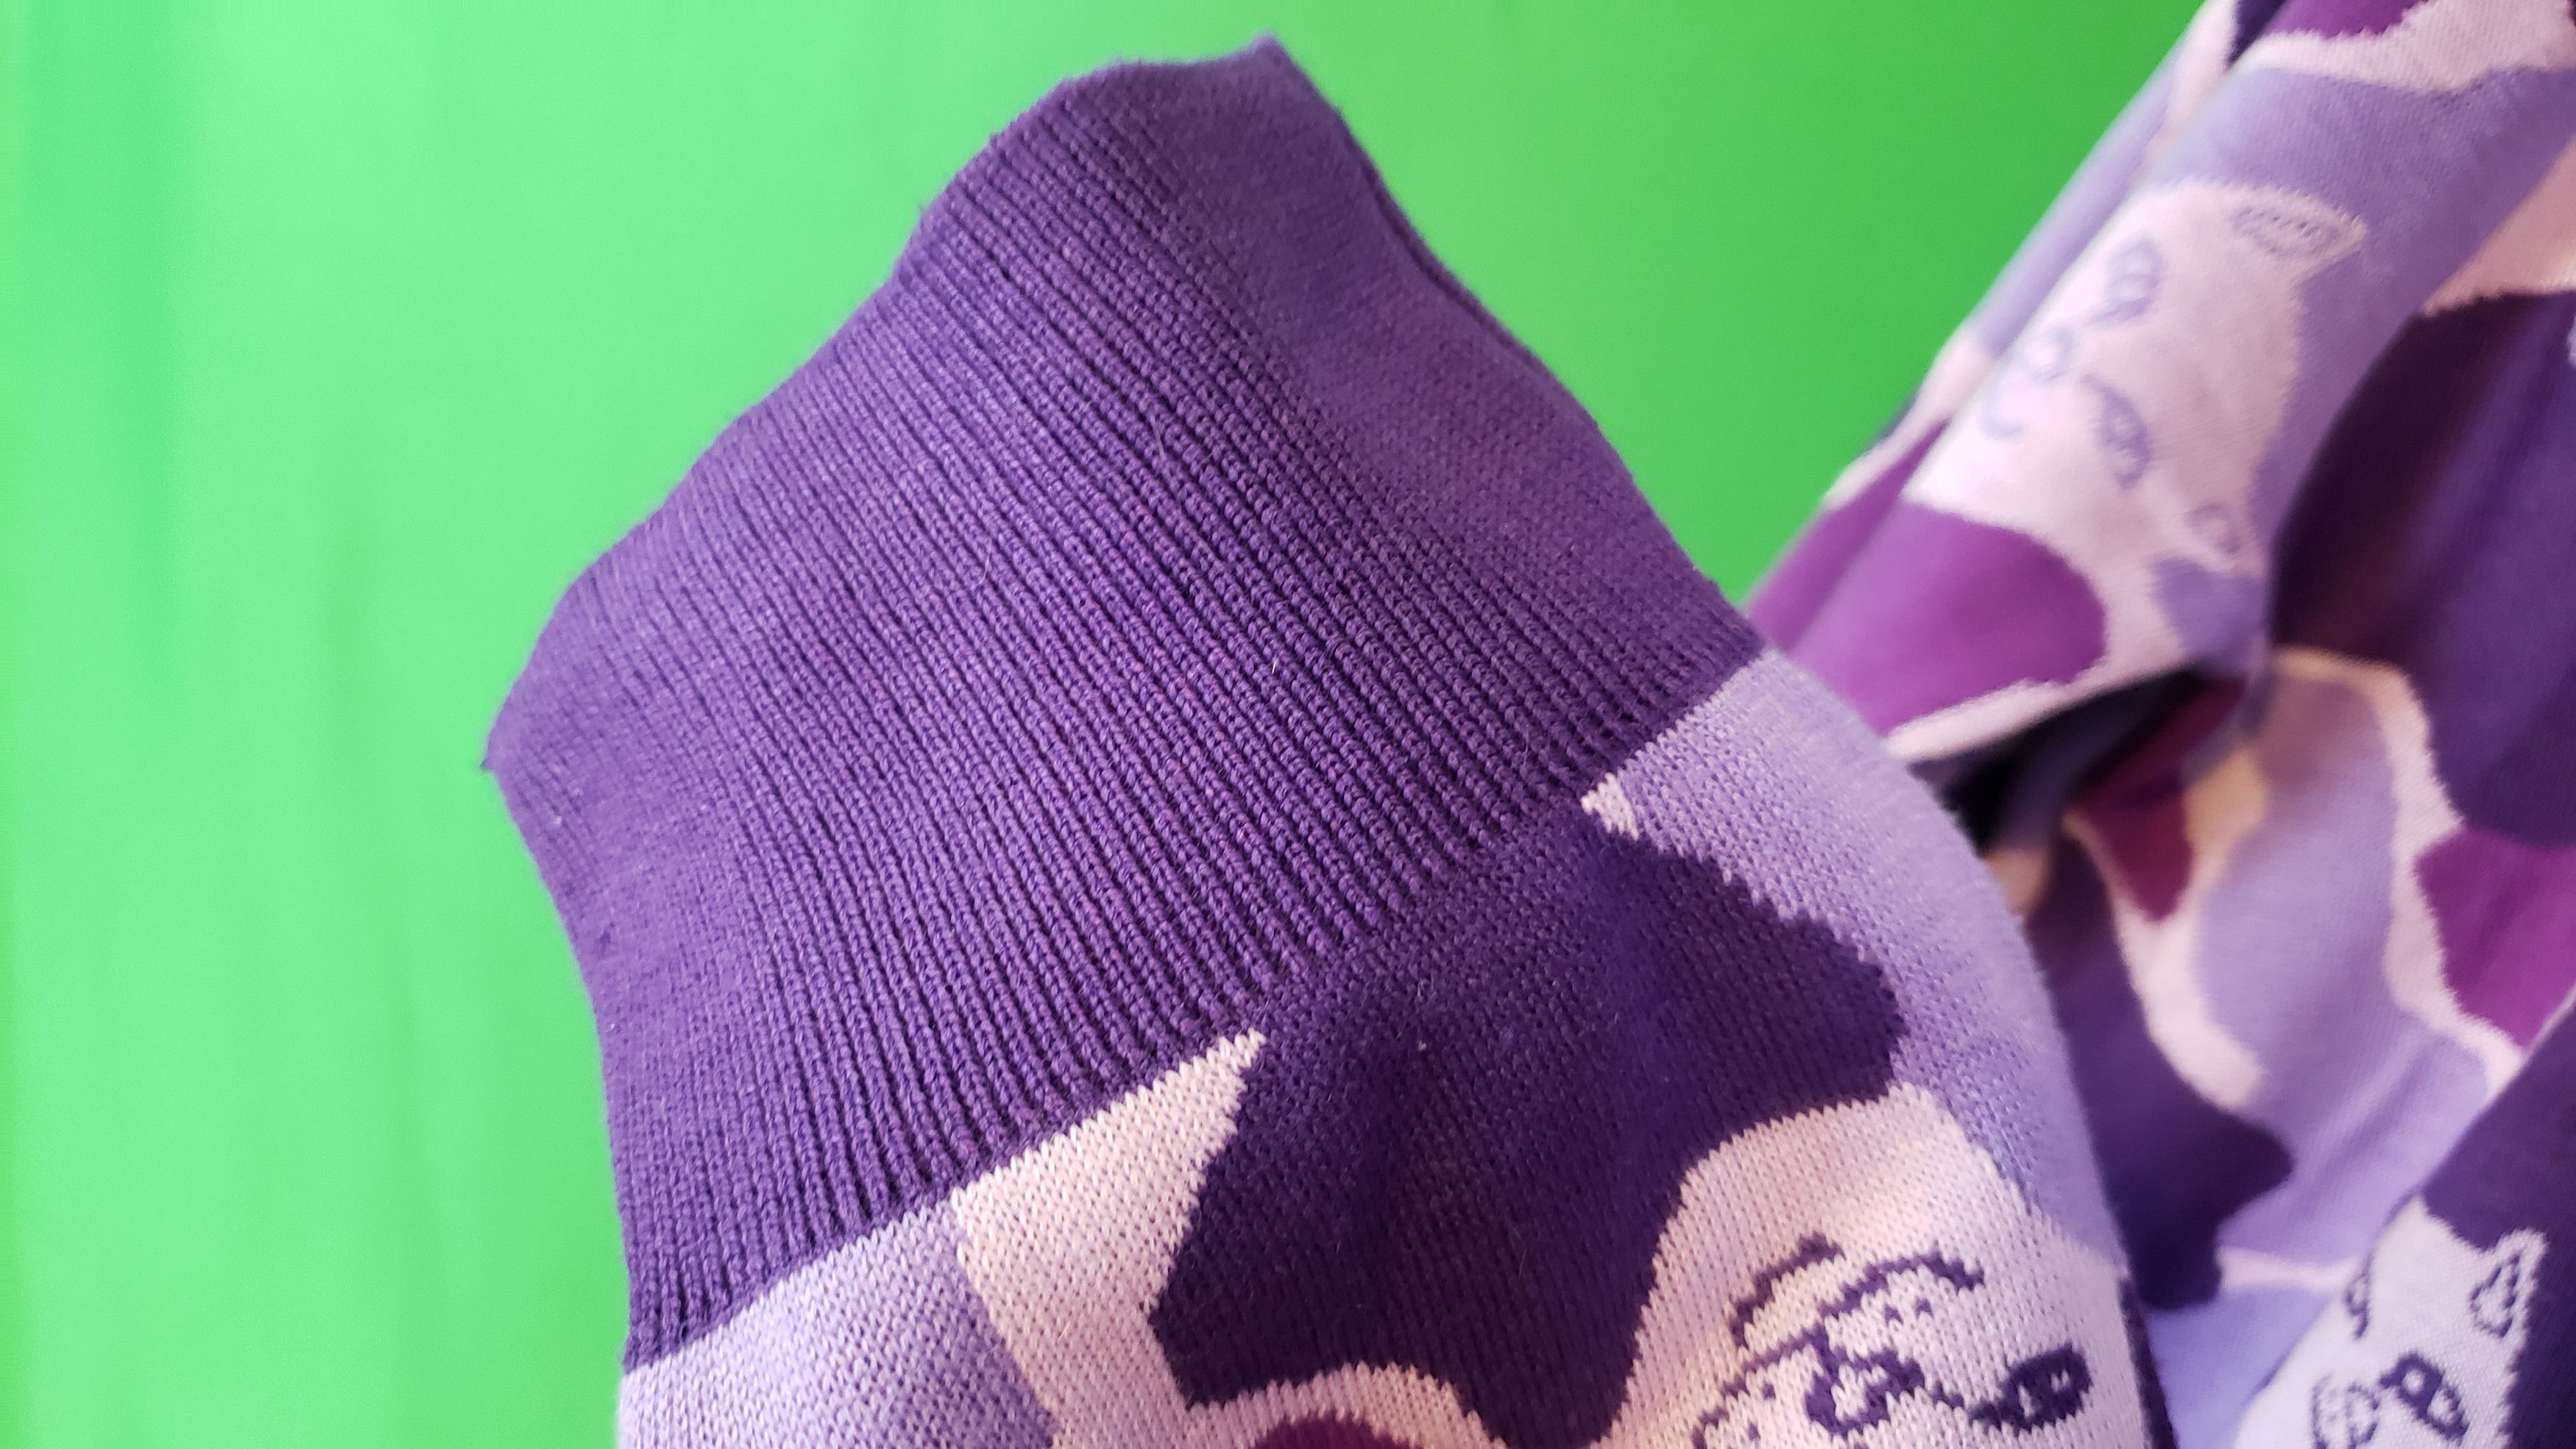 Rip N Dip RIP N DIP Purple Nermal Camo Crewneck Sweater Size US XL / EU 56 / 4 - 6 Thumbnail